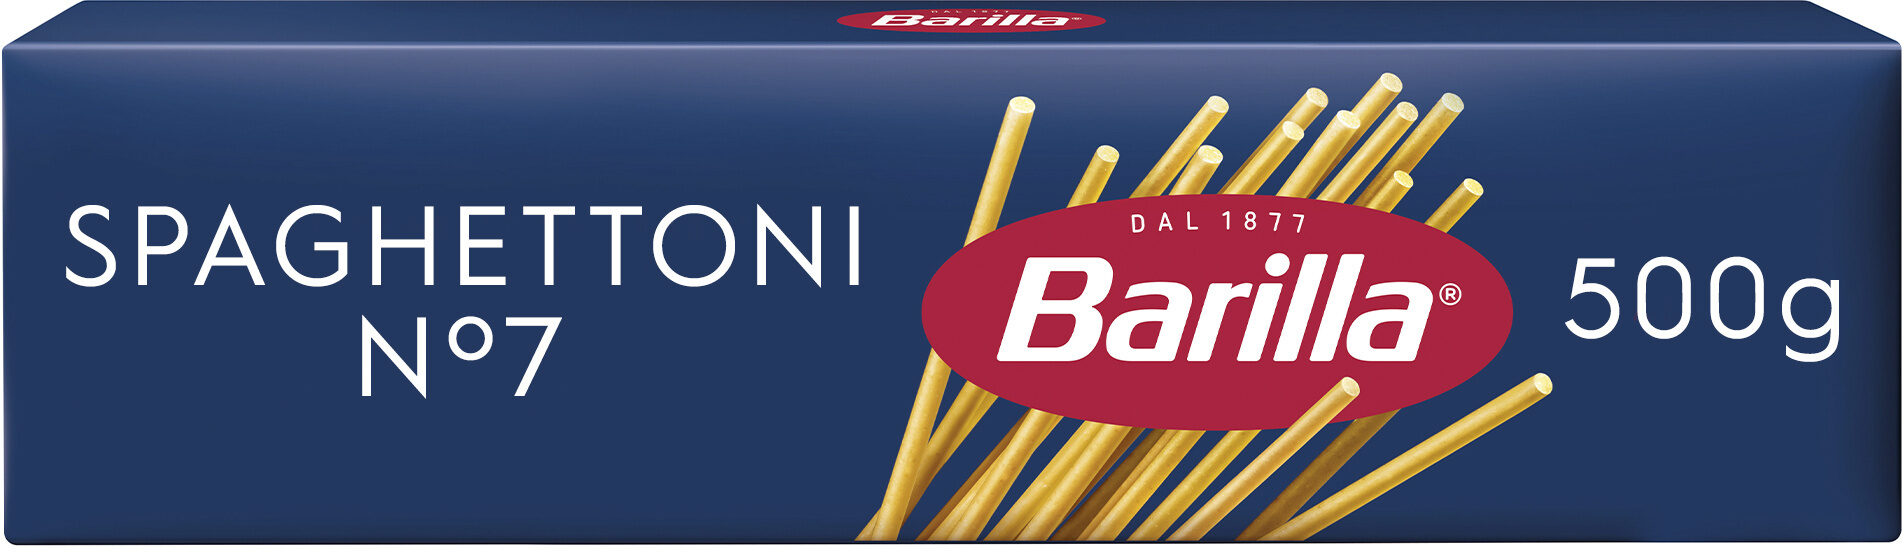 Barilla pates spaghettoni n°7 500g - Produkt - fr